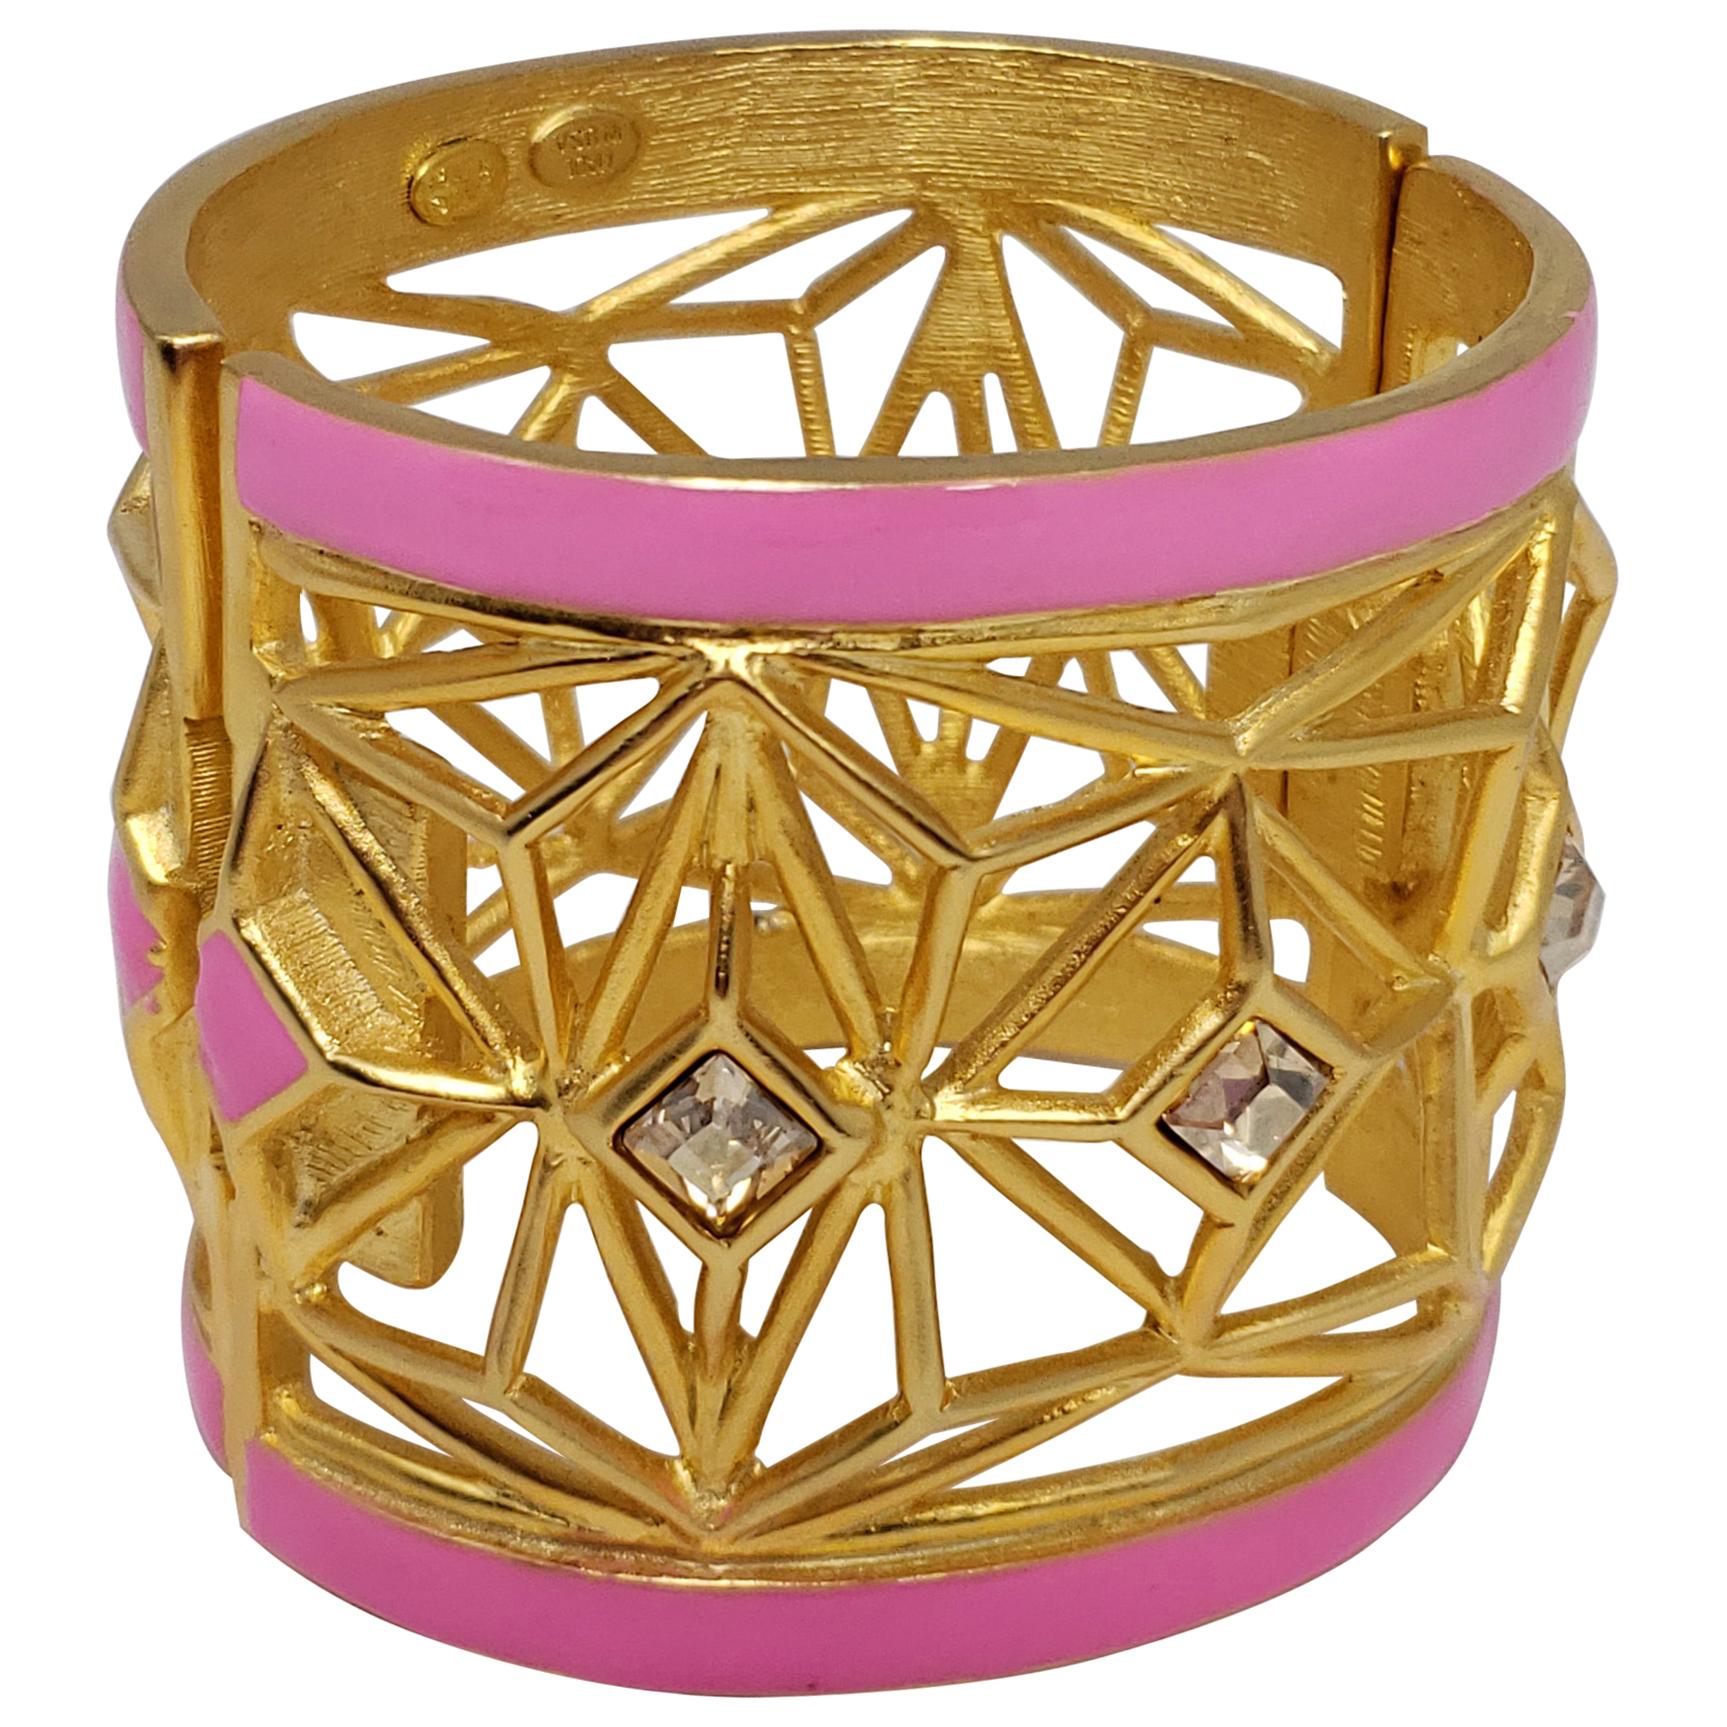 Kenneth Jay Lane KJL Geometric Chunky Gold Bangle Bracelet with Pink Accents